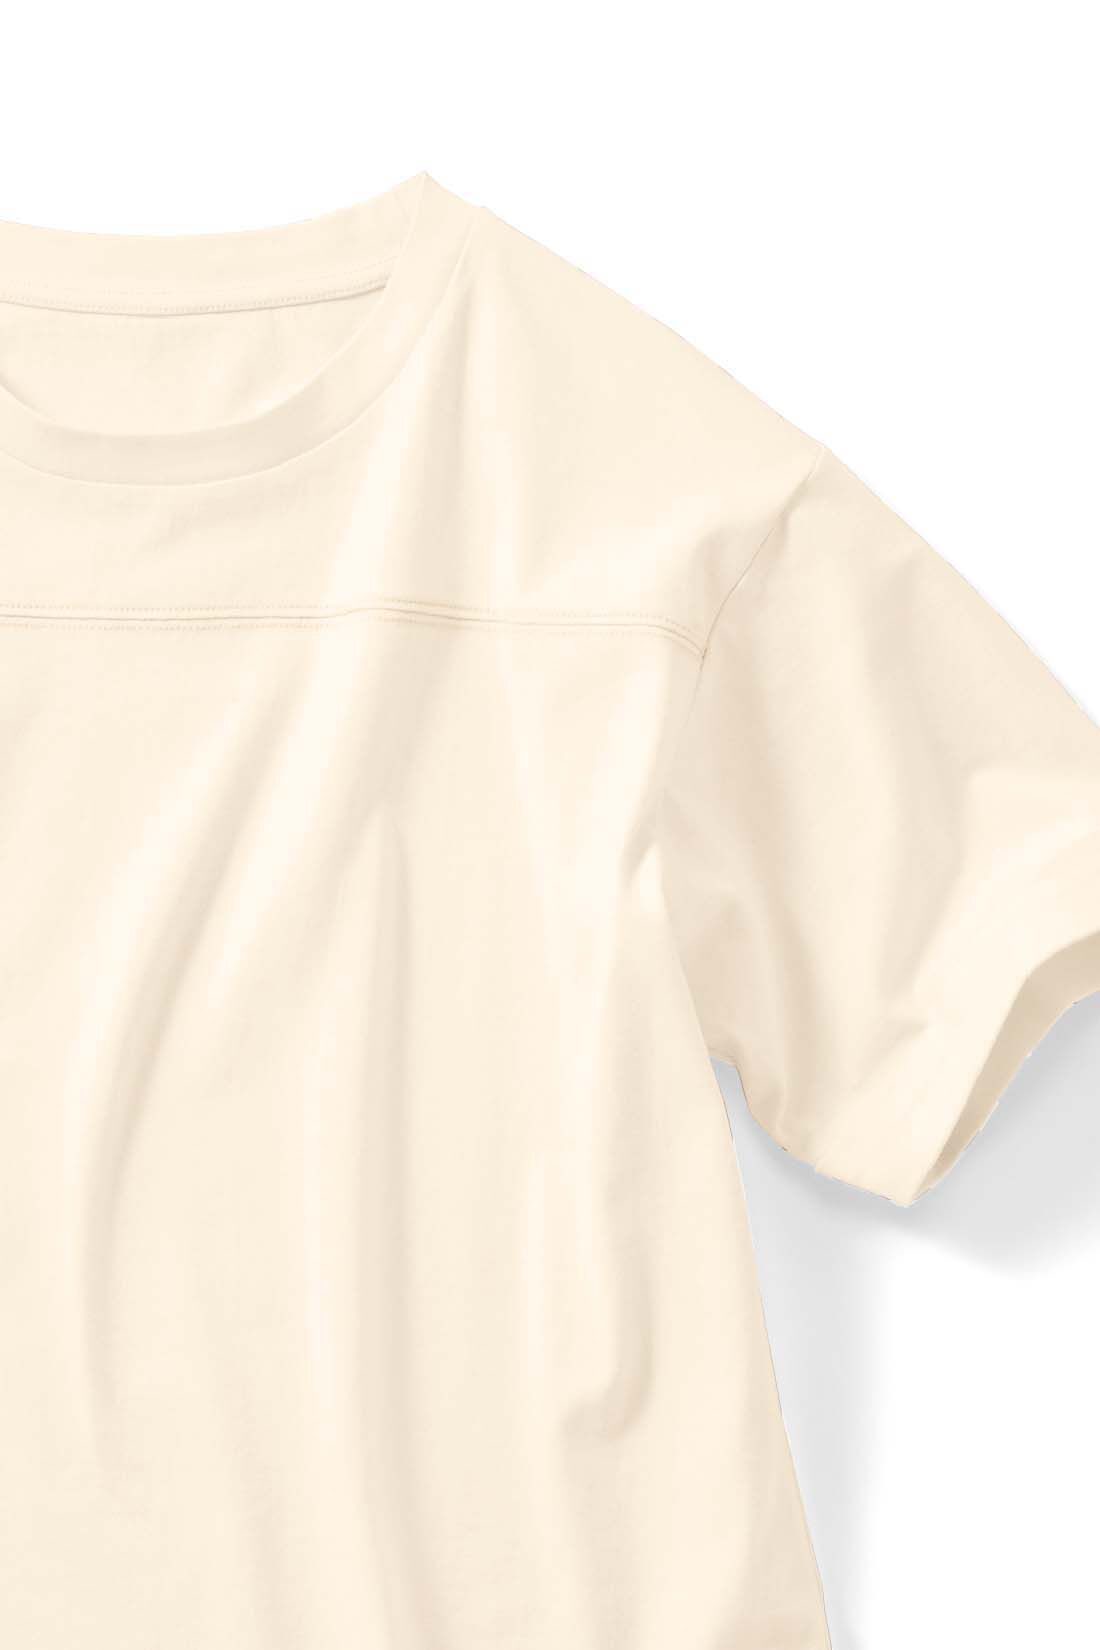 Live in  comfort|Live love cottonプロジェクト　リブ イン コンフォート　栞里ちゃんとつくったオーガニックコットンの大人ナンバーTシャツ〈チャコールグレー〉|天竺（じく）編みで、ほどよい厚みのインド産オーガニックコットン100％。